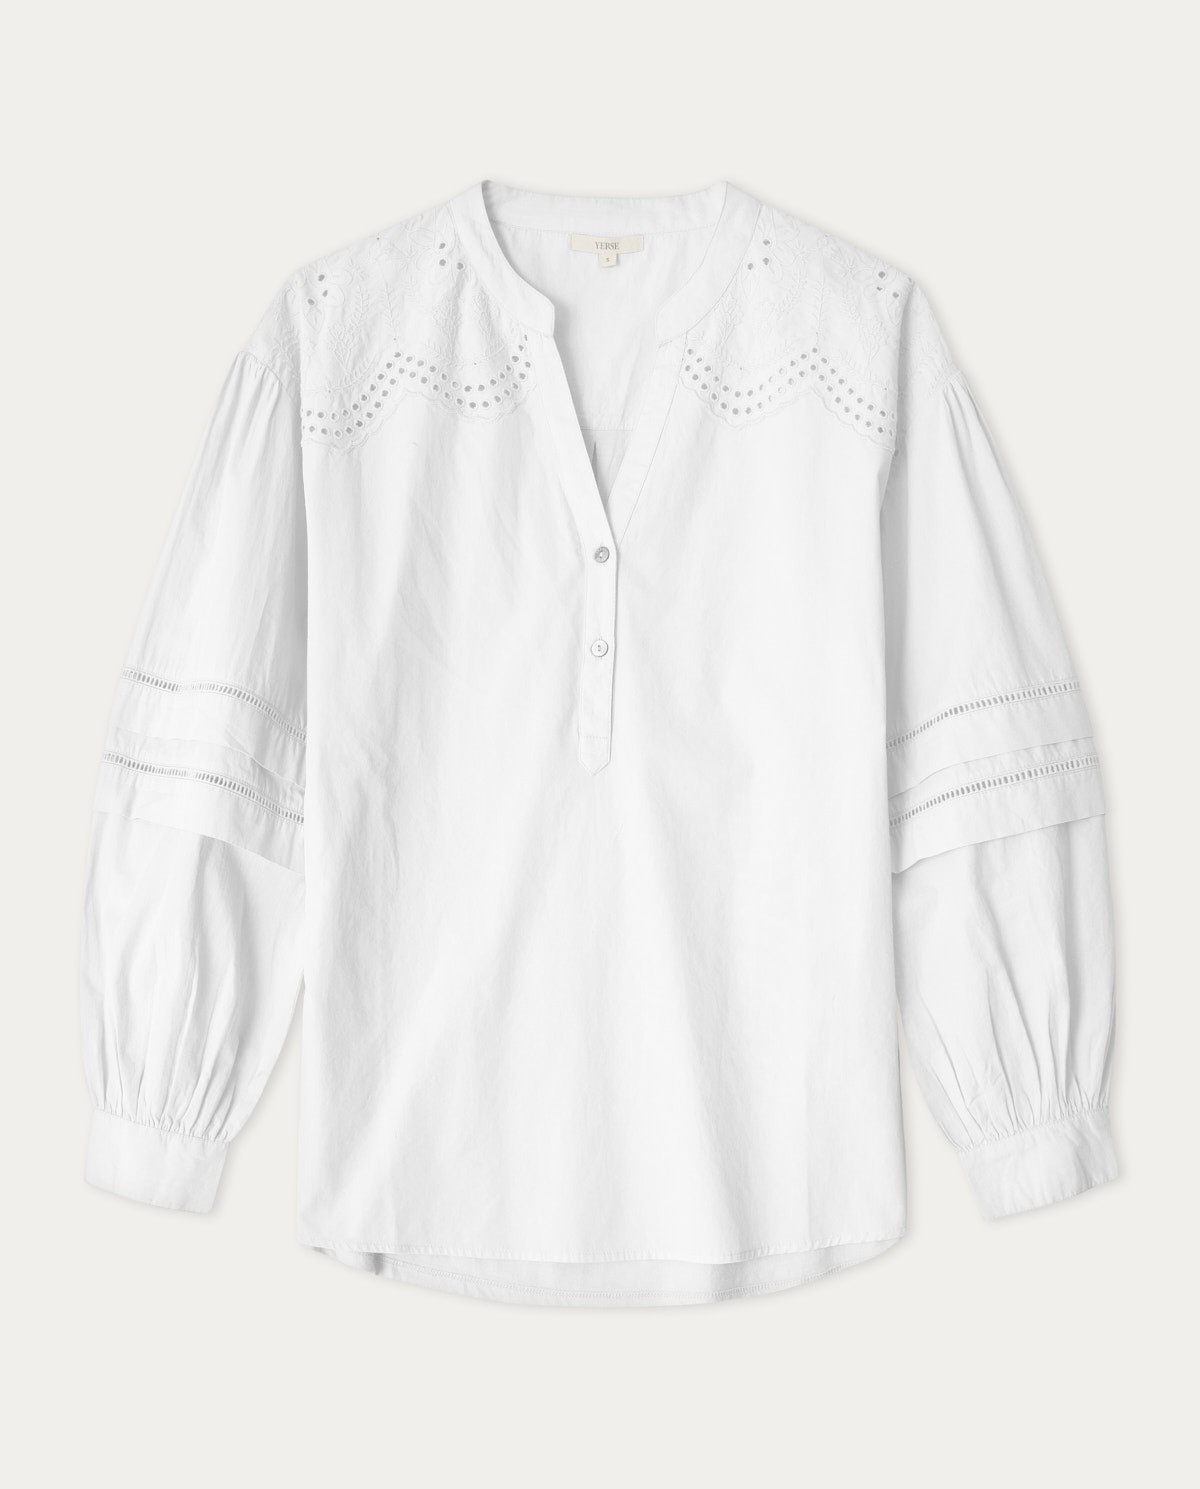 Cotton blouse embroidery White 6